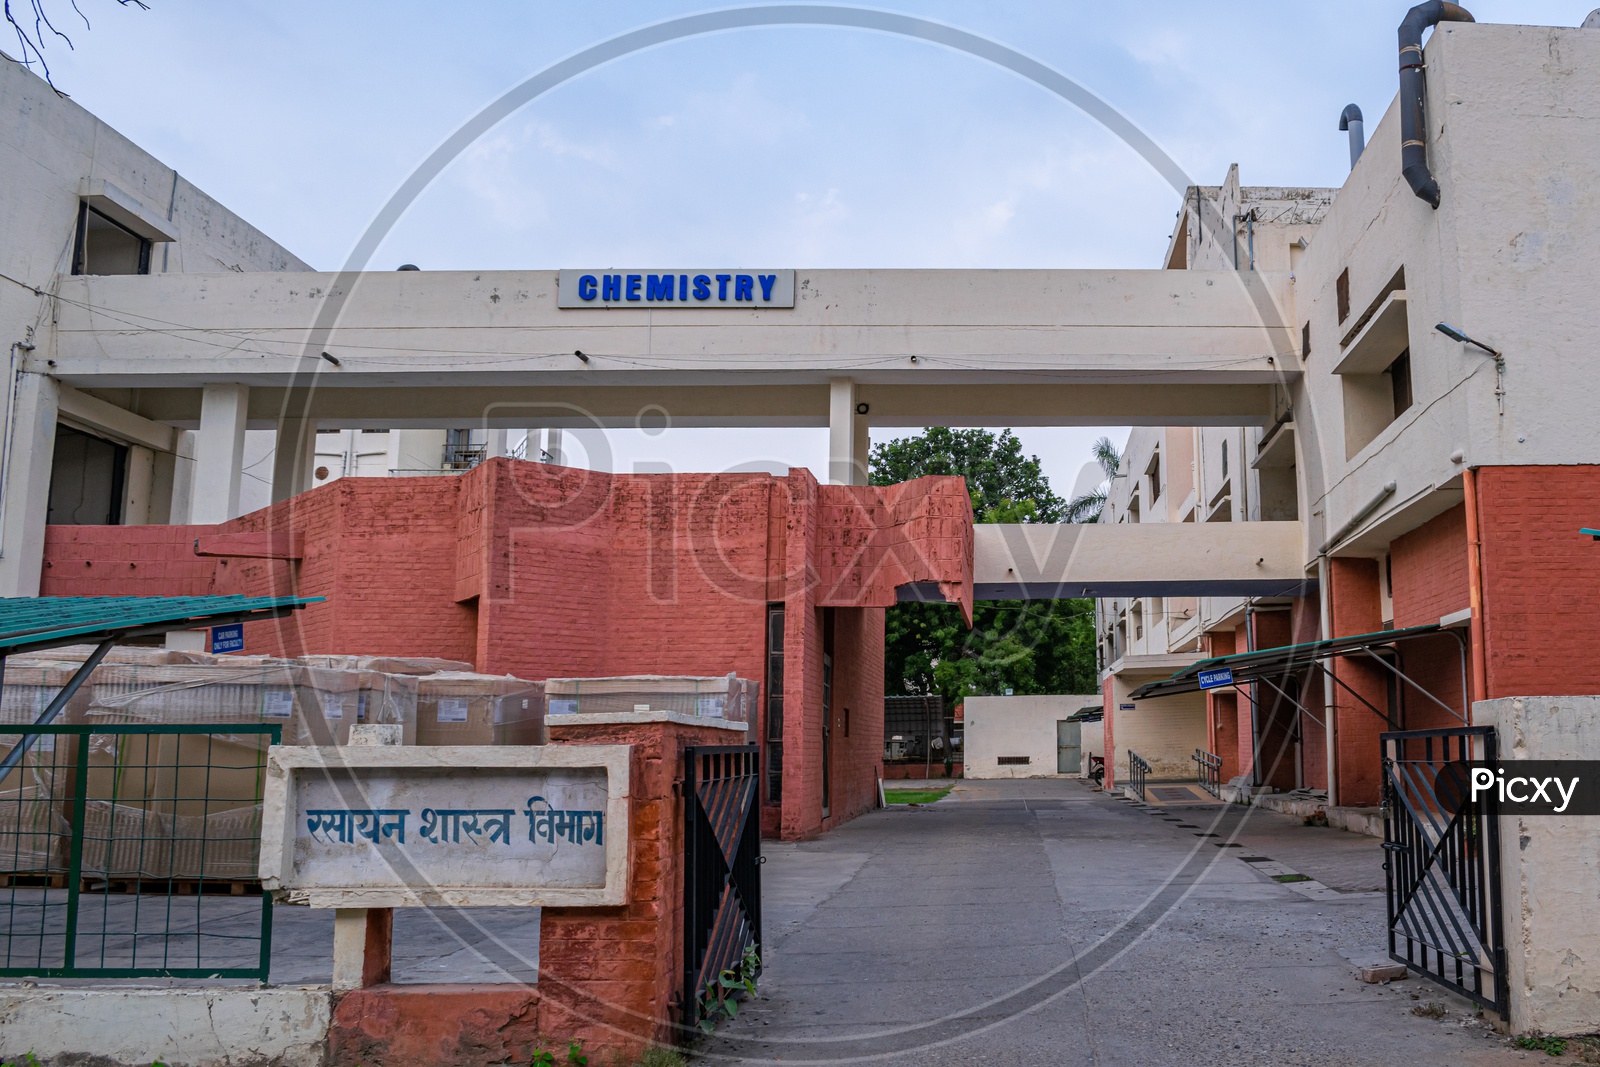 Chemistry Department, Indian Institute of Technology Roorkee (IIT Roorkee)